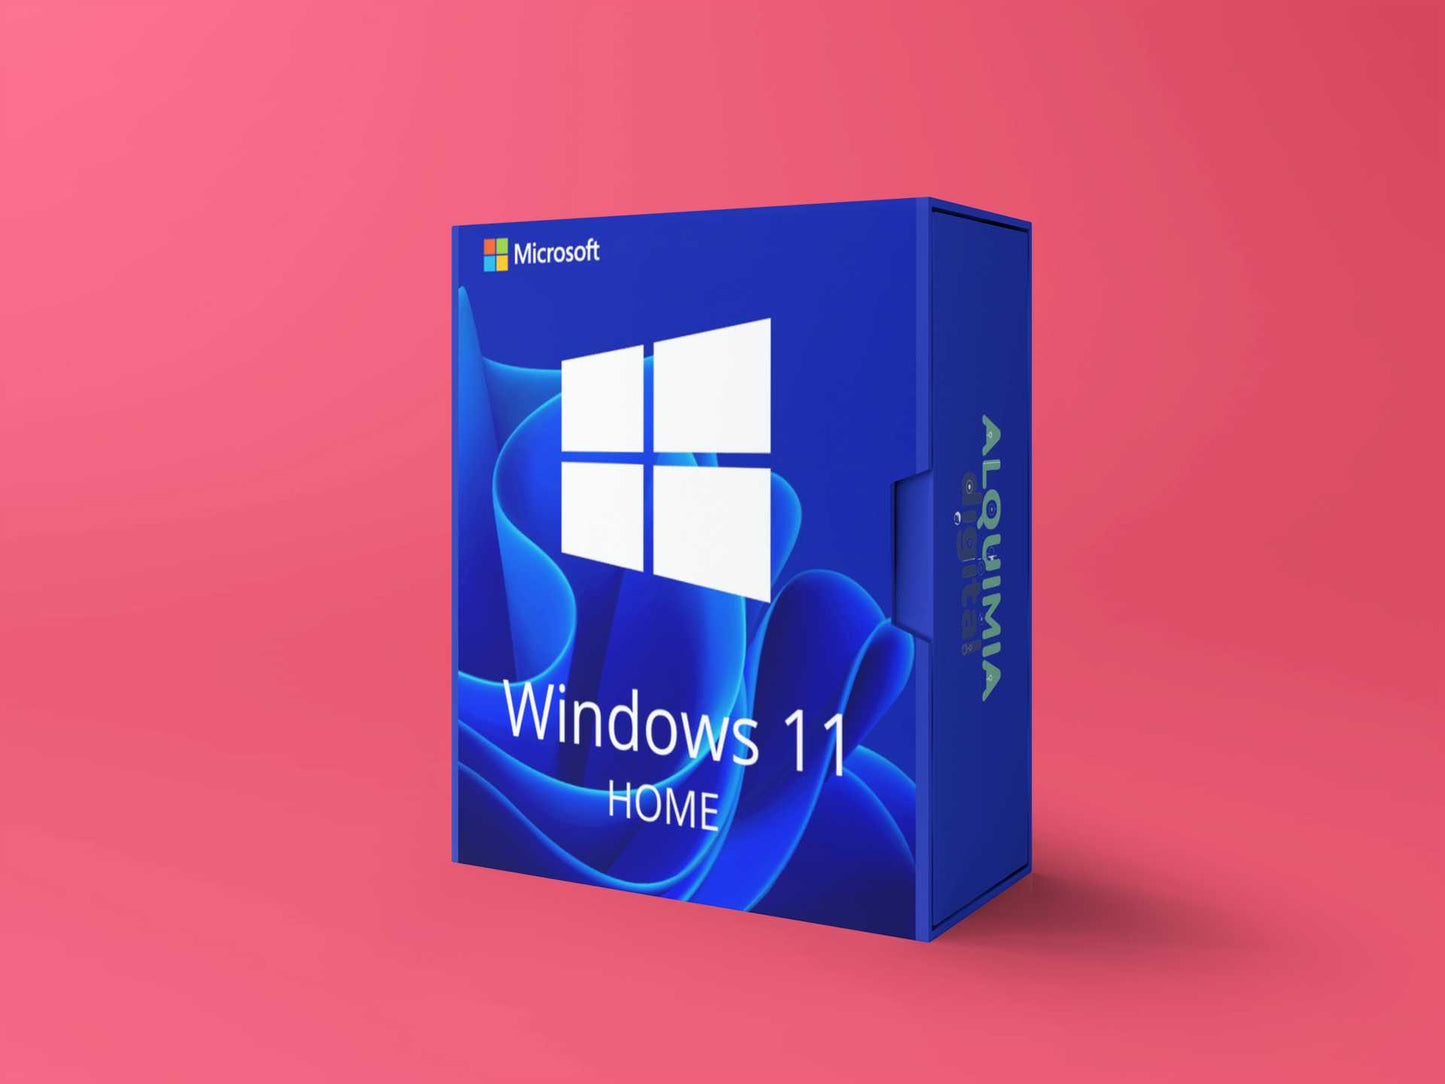 Windows 11 Home